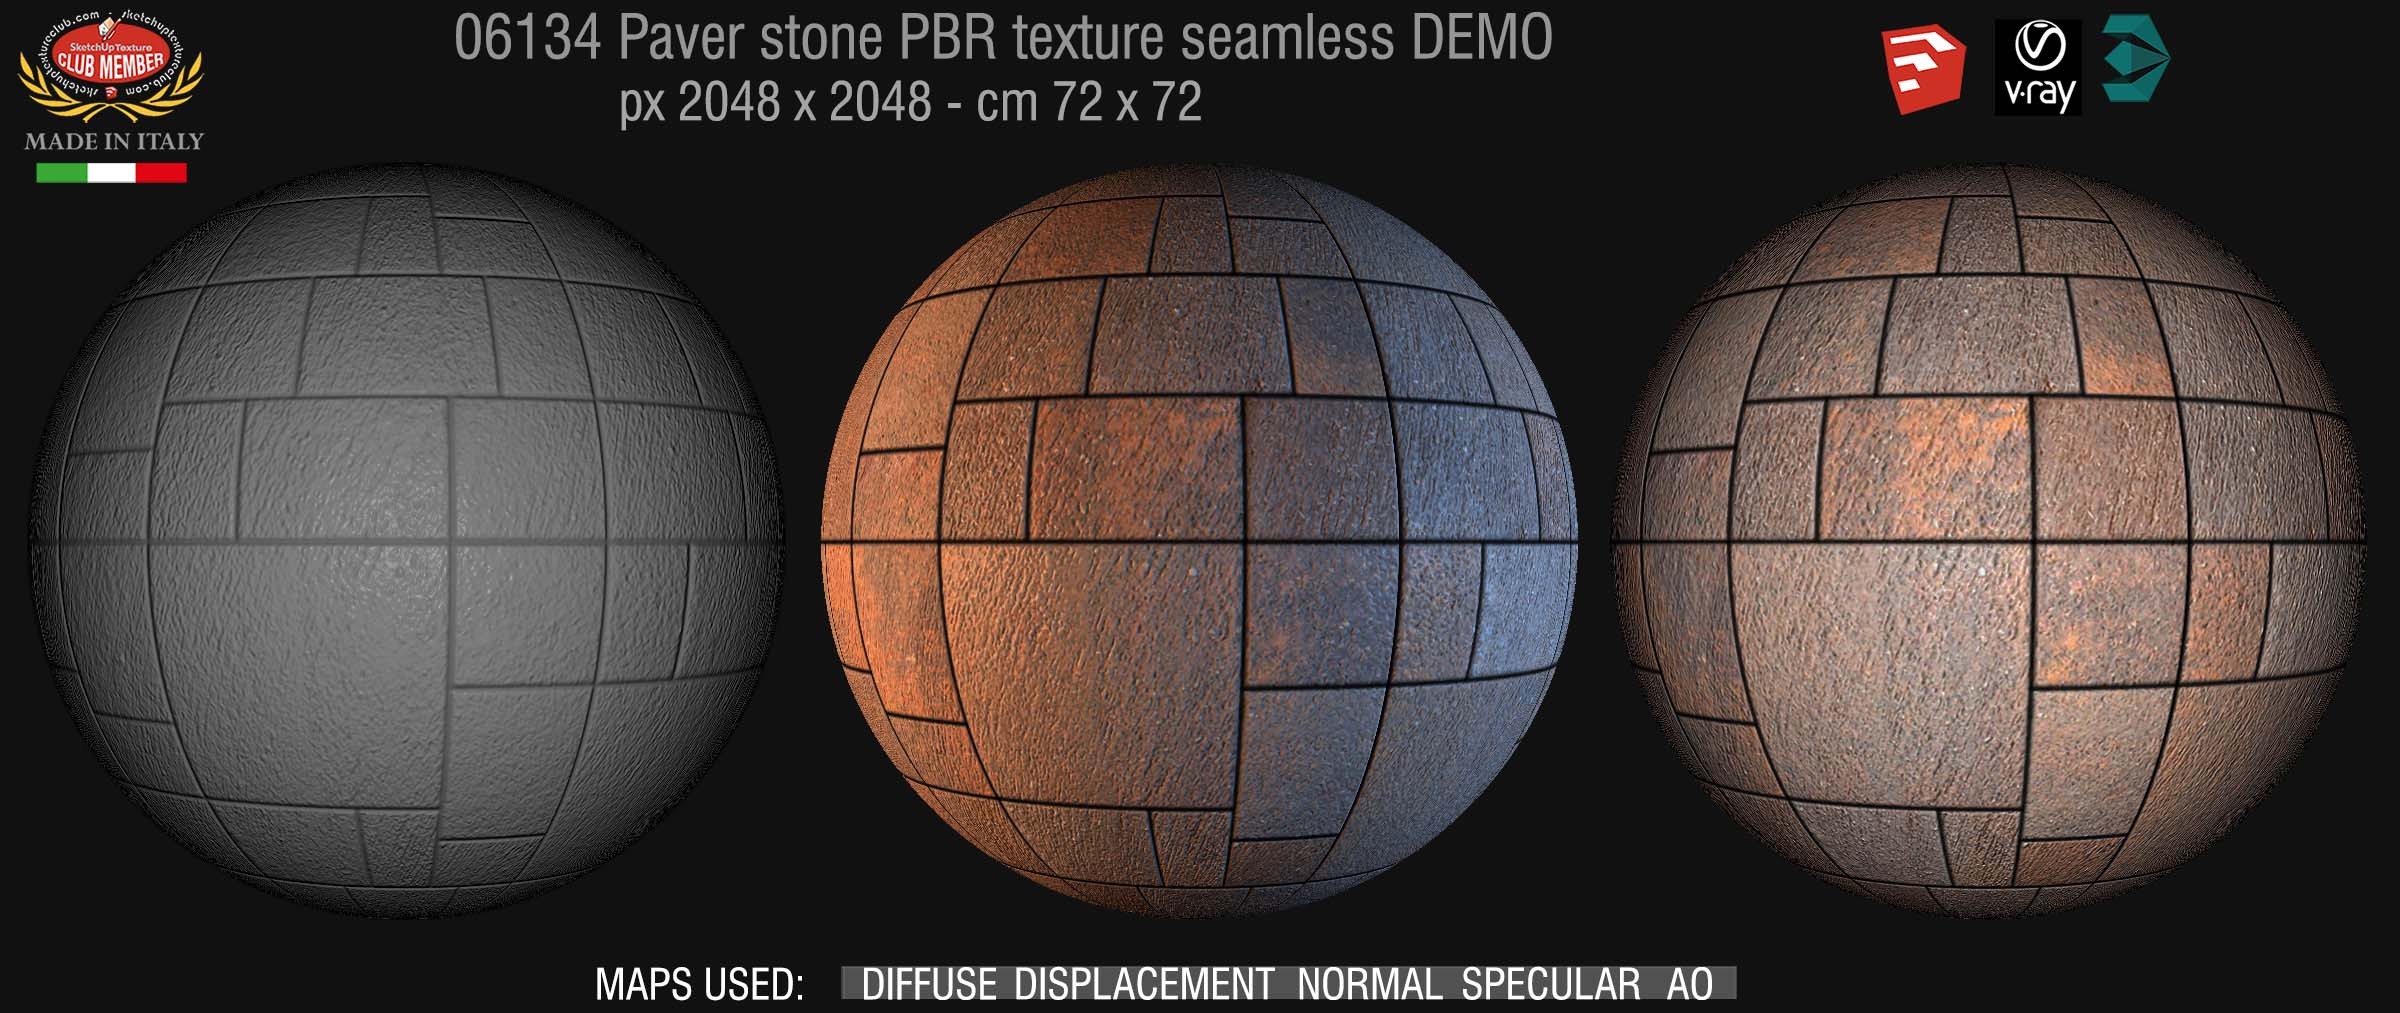 06134 paver stone PBR texture seamless DEMO